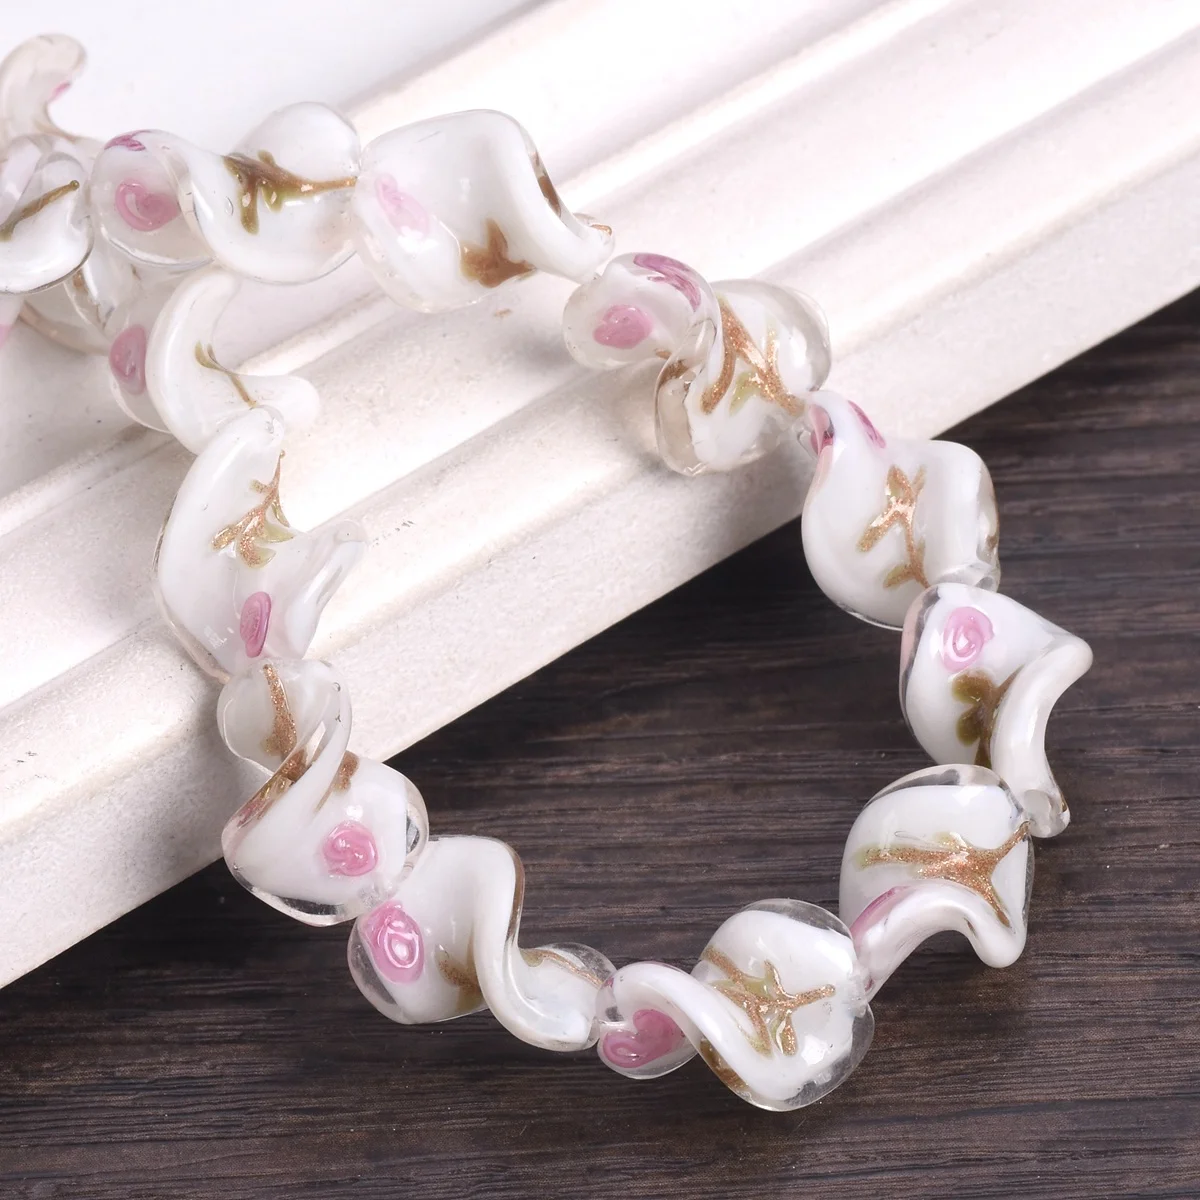 10pcs Twist Shape 18x13mm Handmade Flower Lampwork Glass Loose Crafts Beads For Jewelry Making DIY Earring Findings